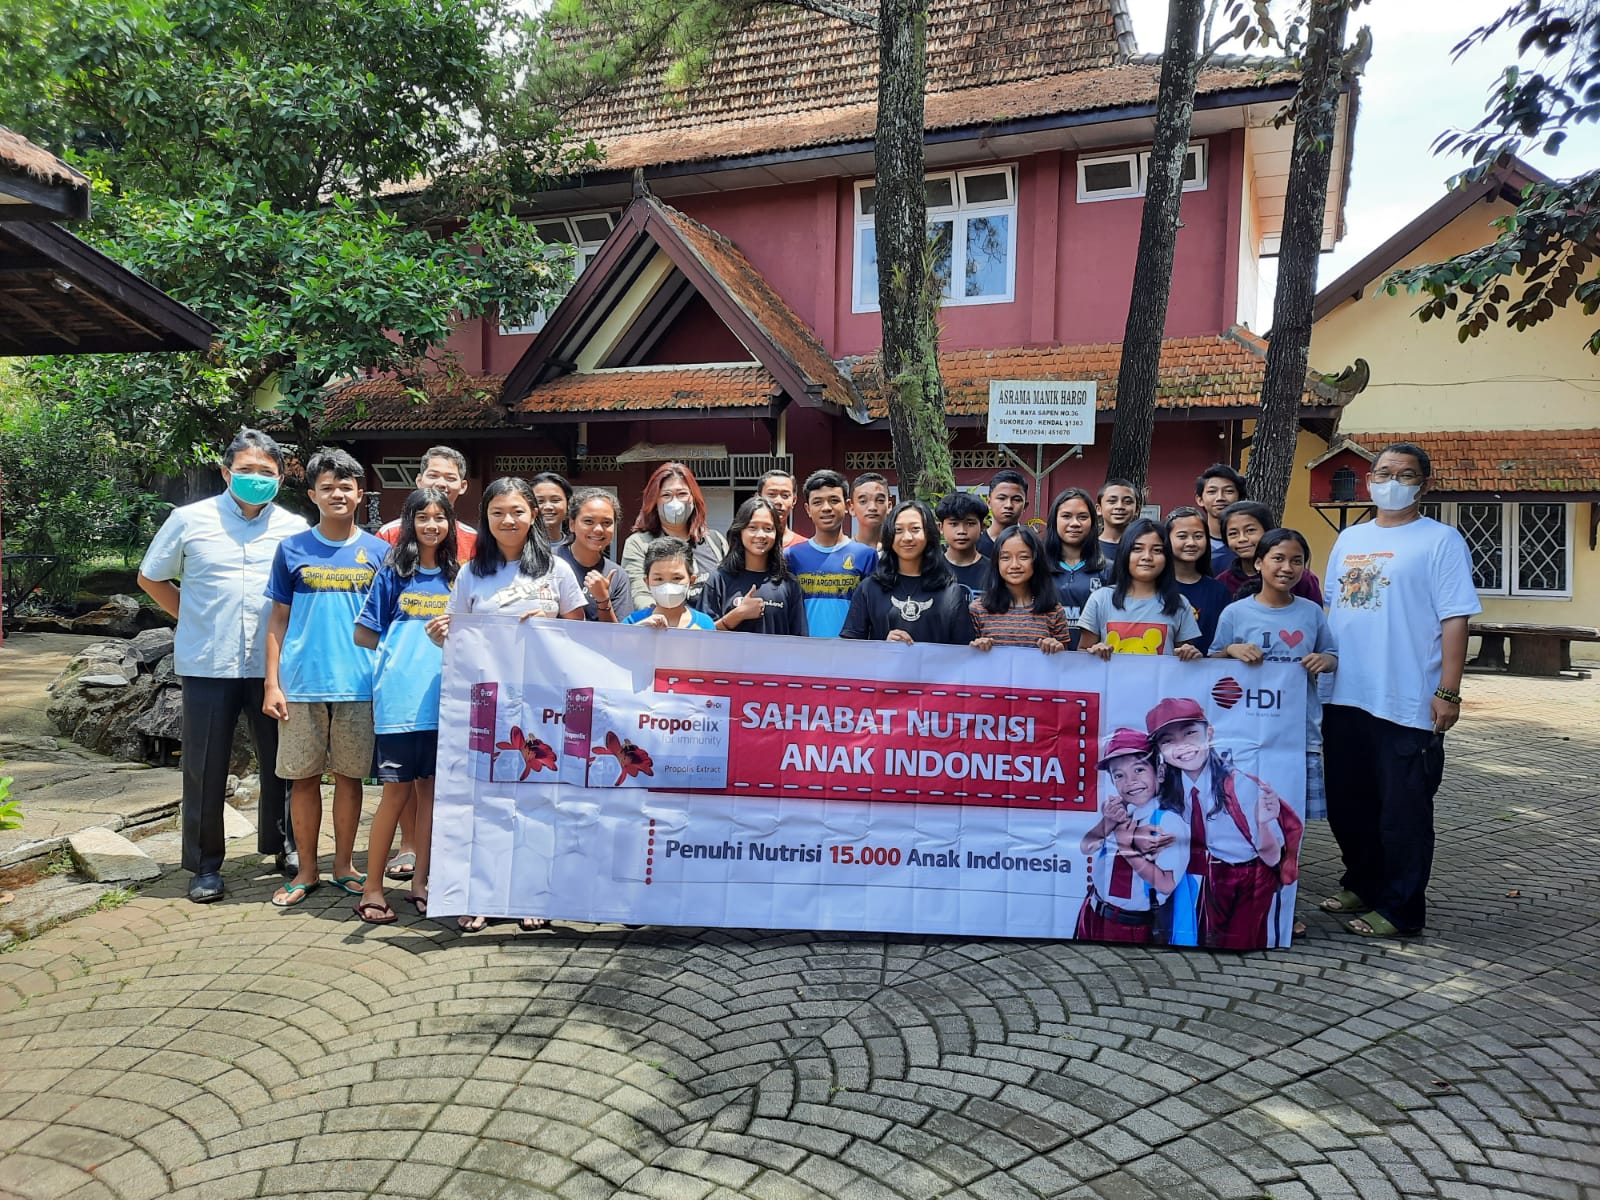 HDI Sahabat Nutrisi Anak Indoneisa